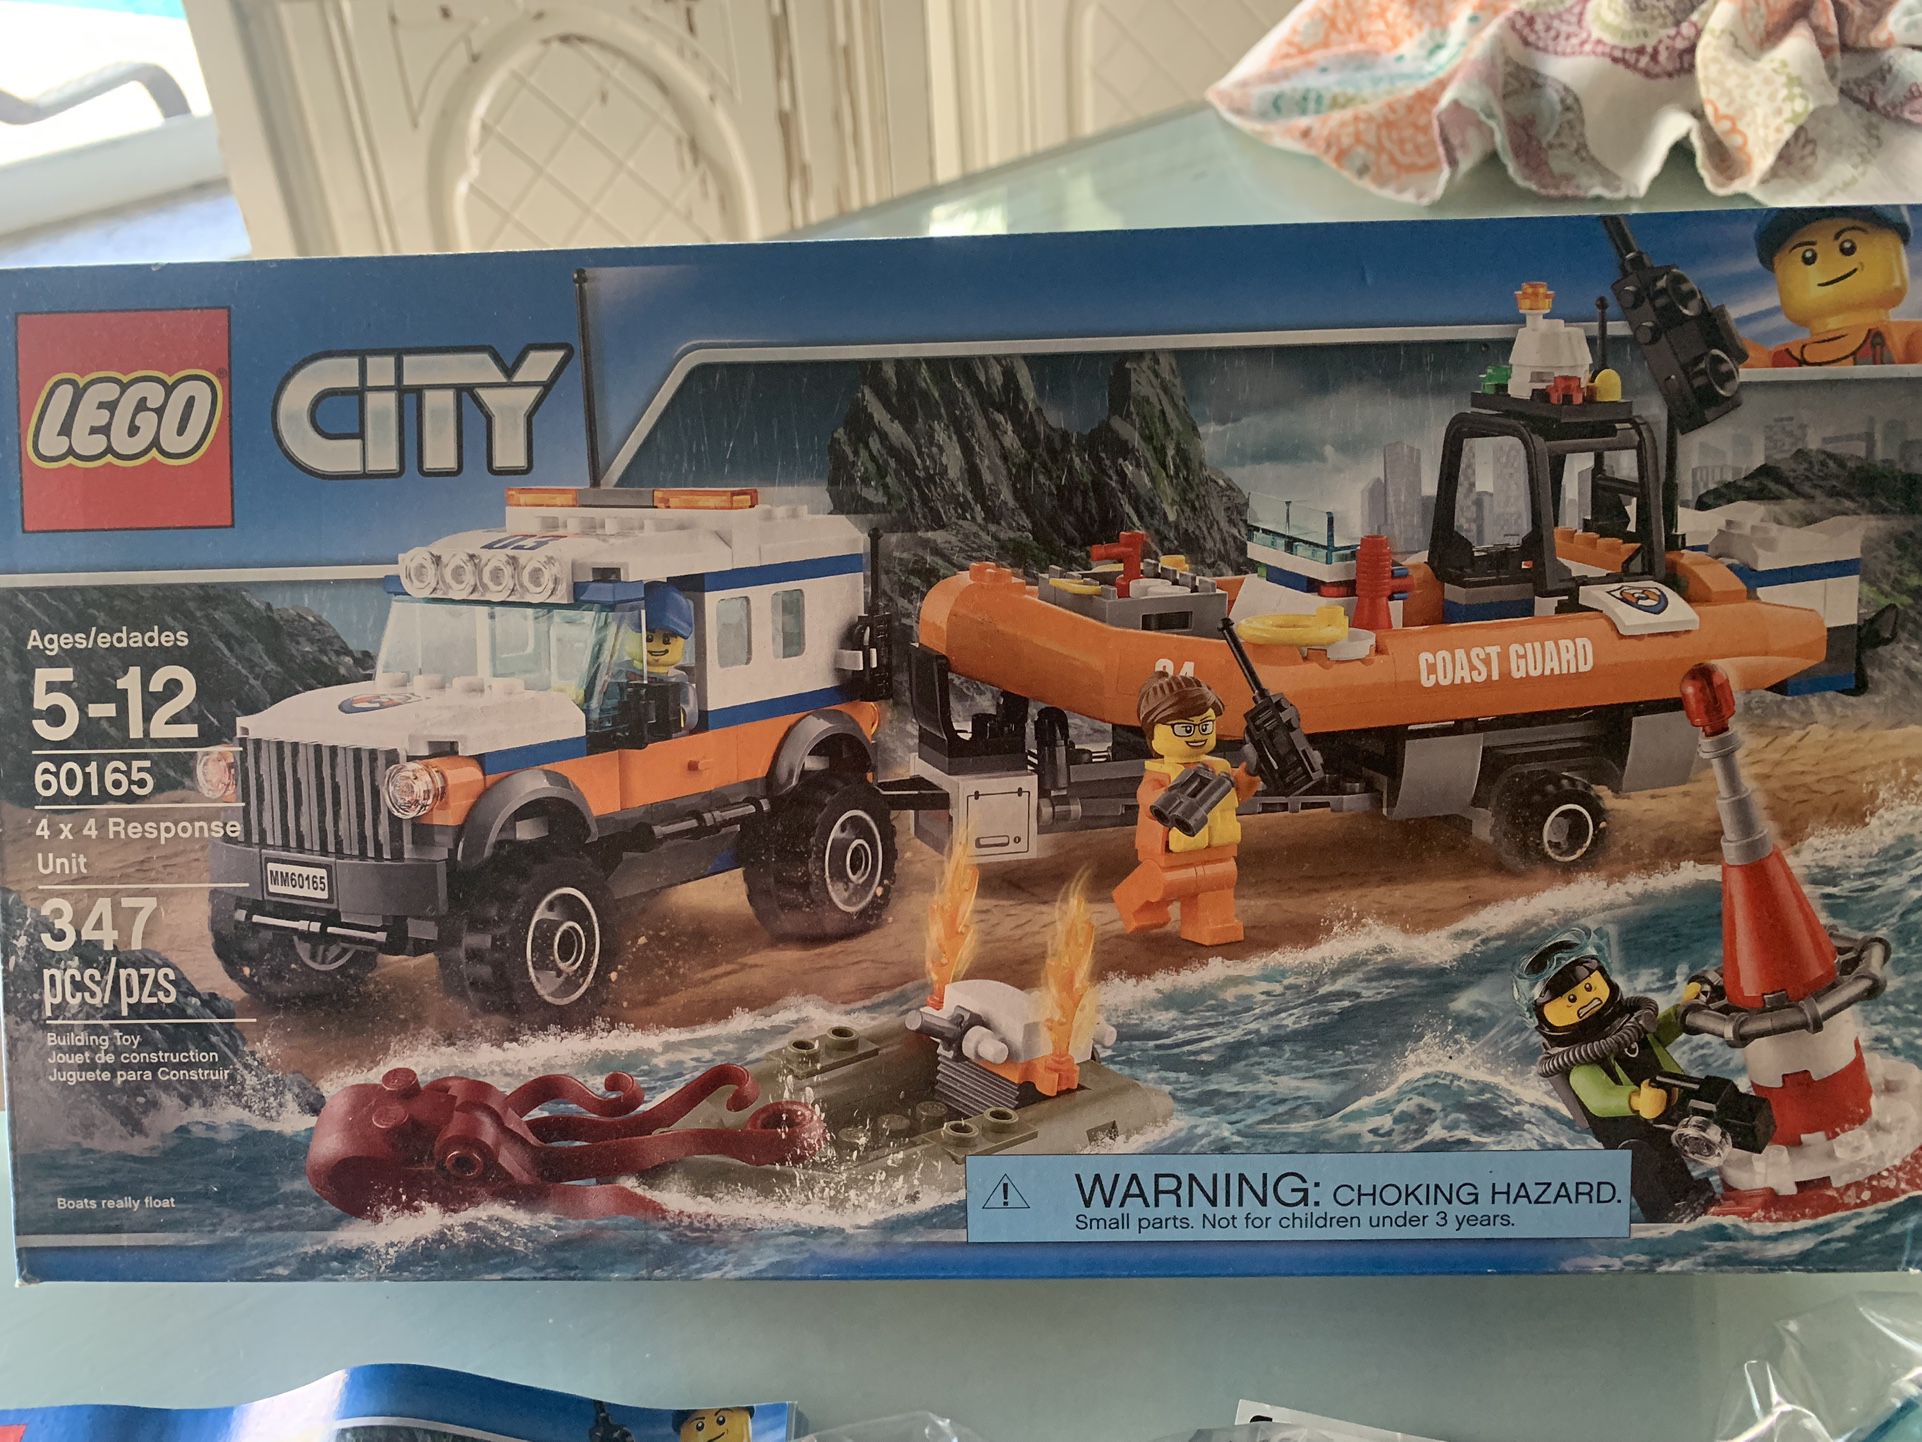 Lego City 4X4 Response Unit - 60165